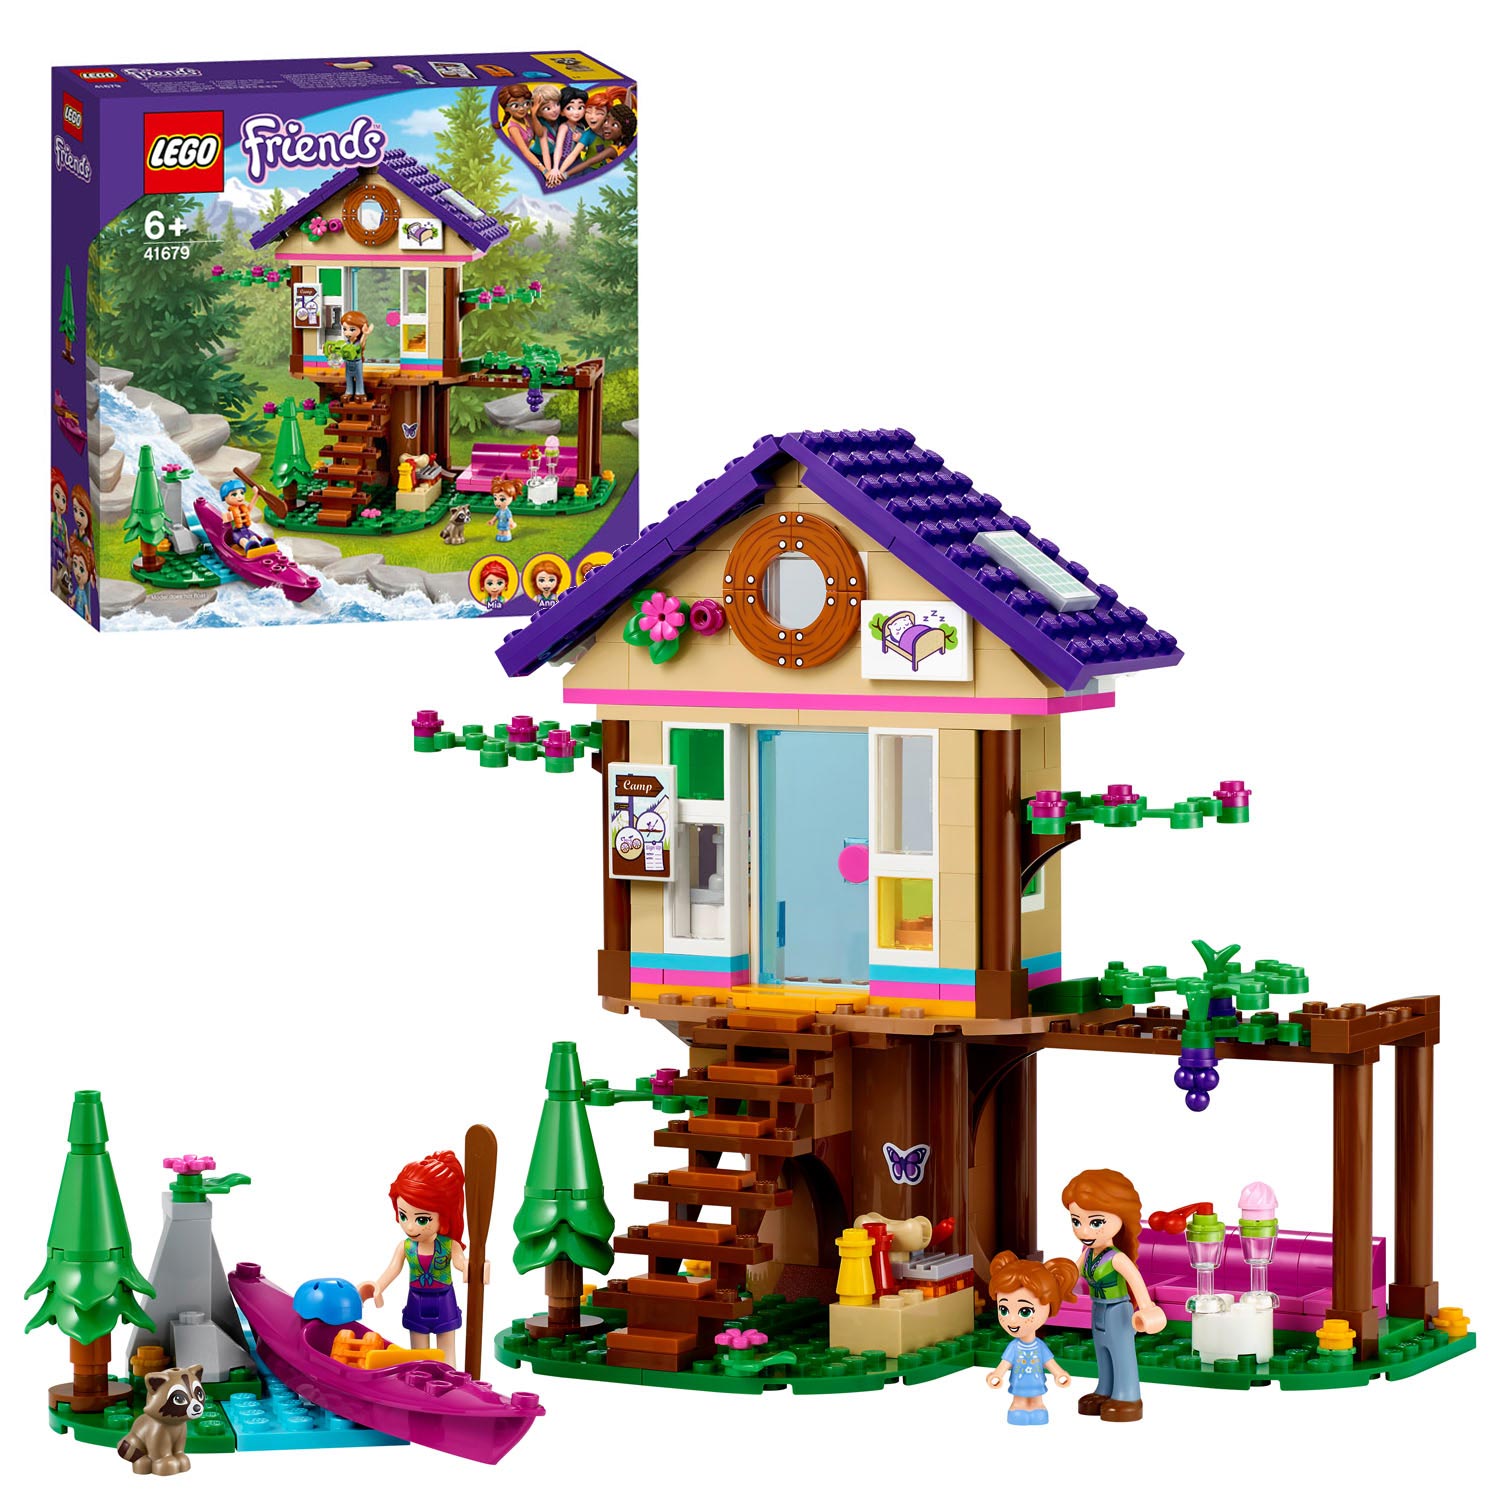 ontbijt aanval Vooruitzien LEGO Friends 41679 Forest House | Thimble Toys